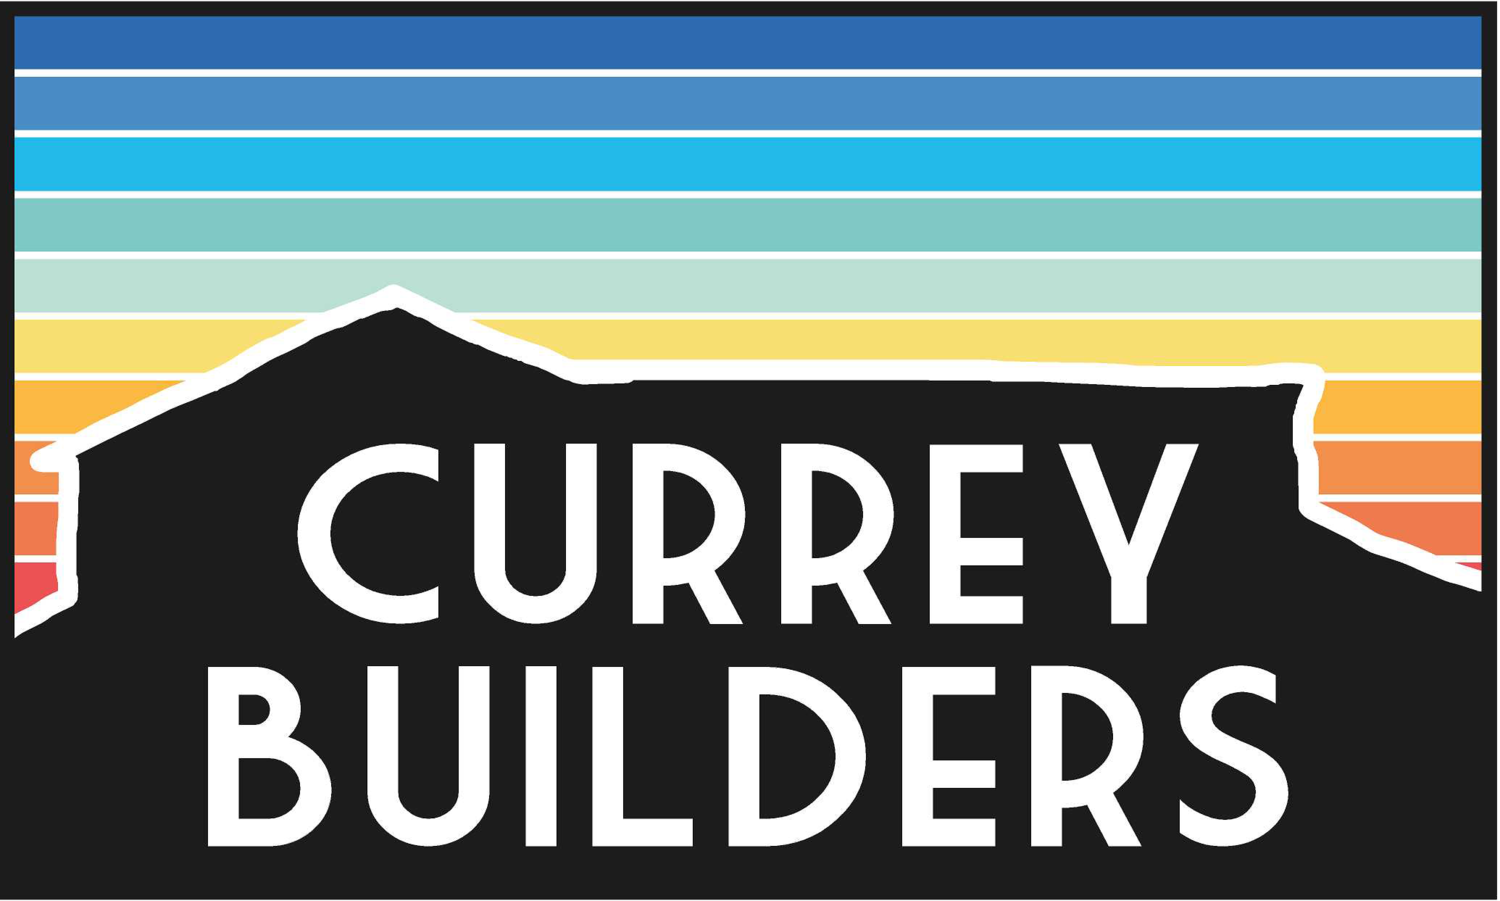 Currey Builders